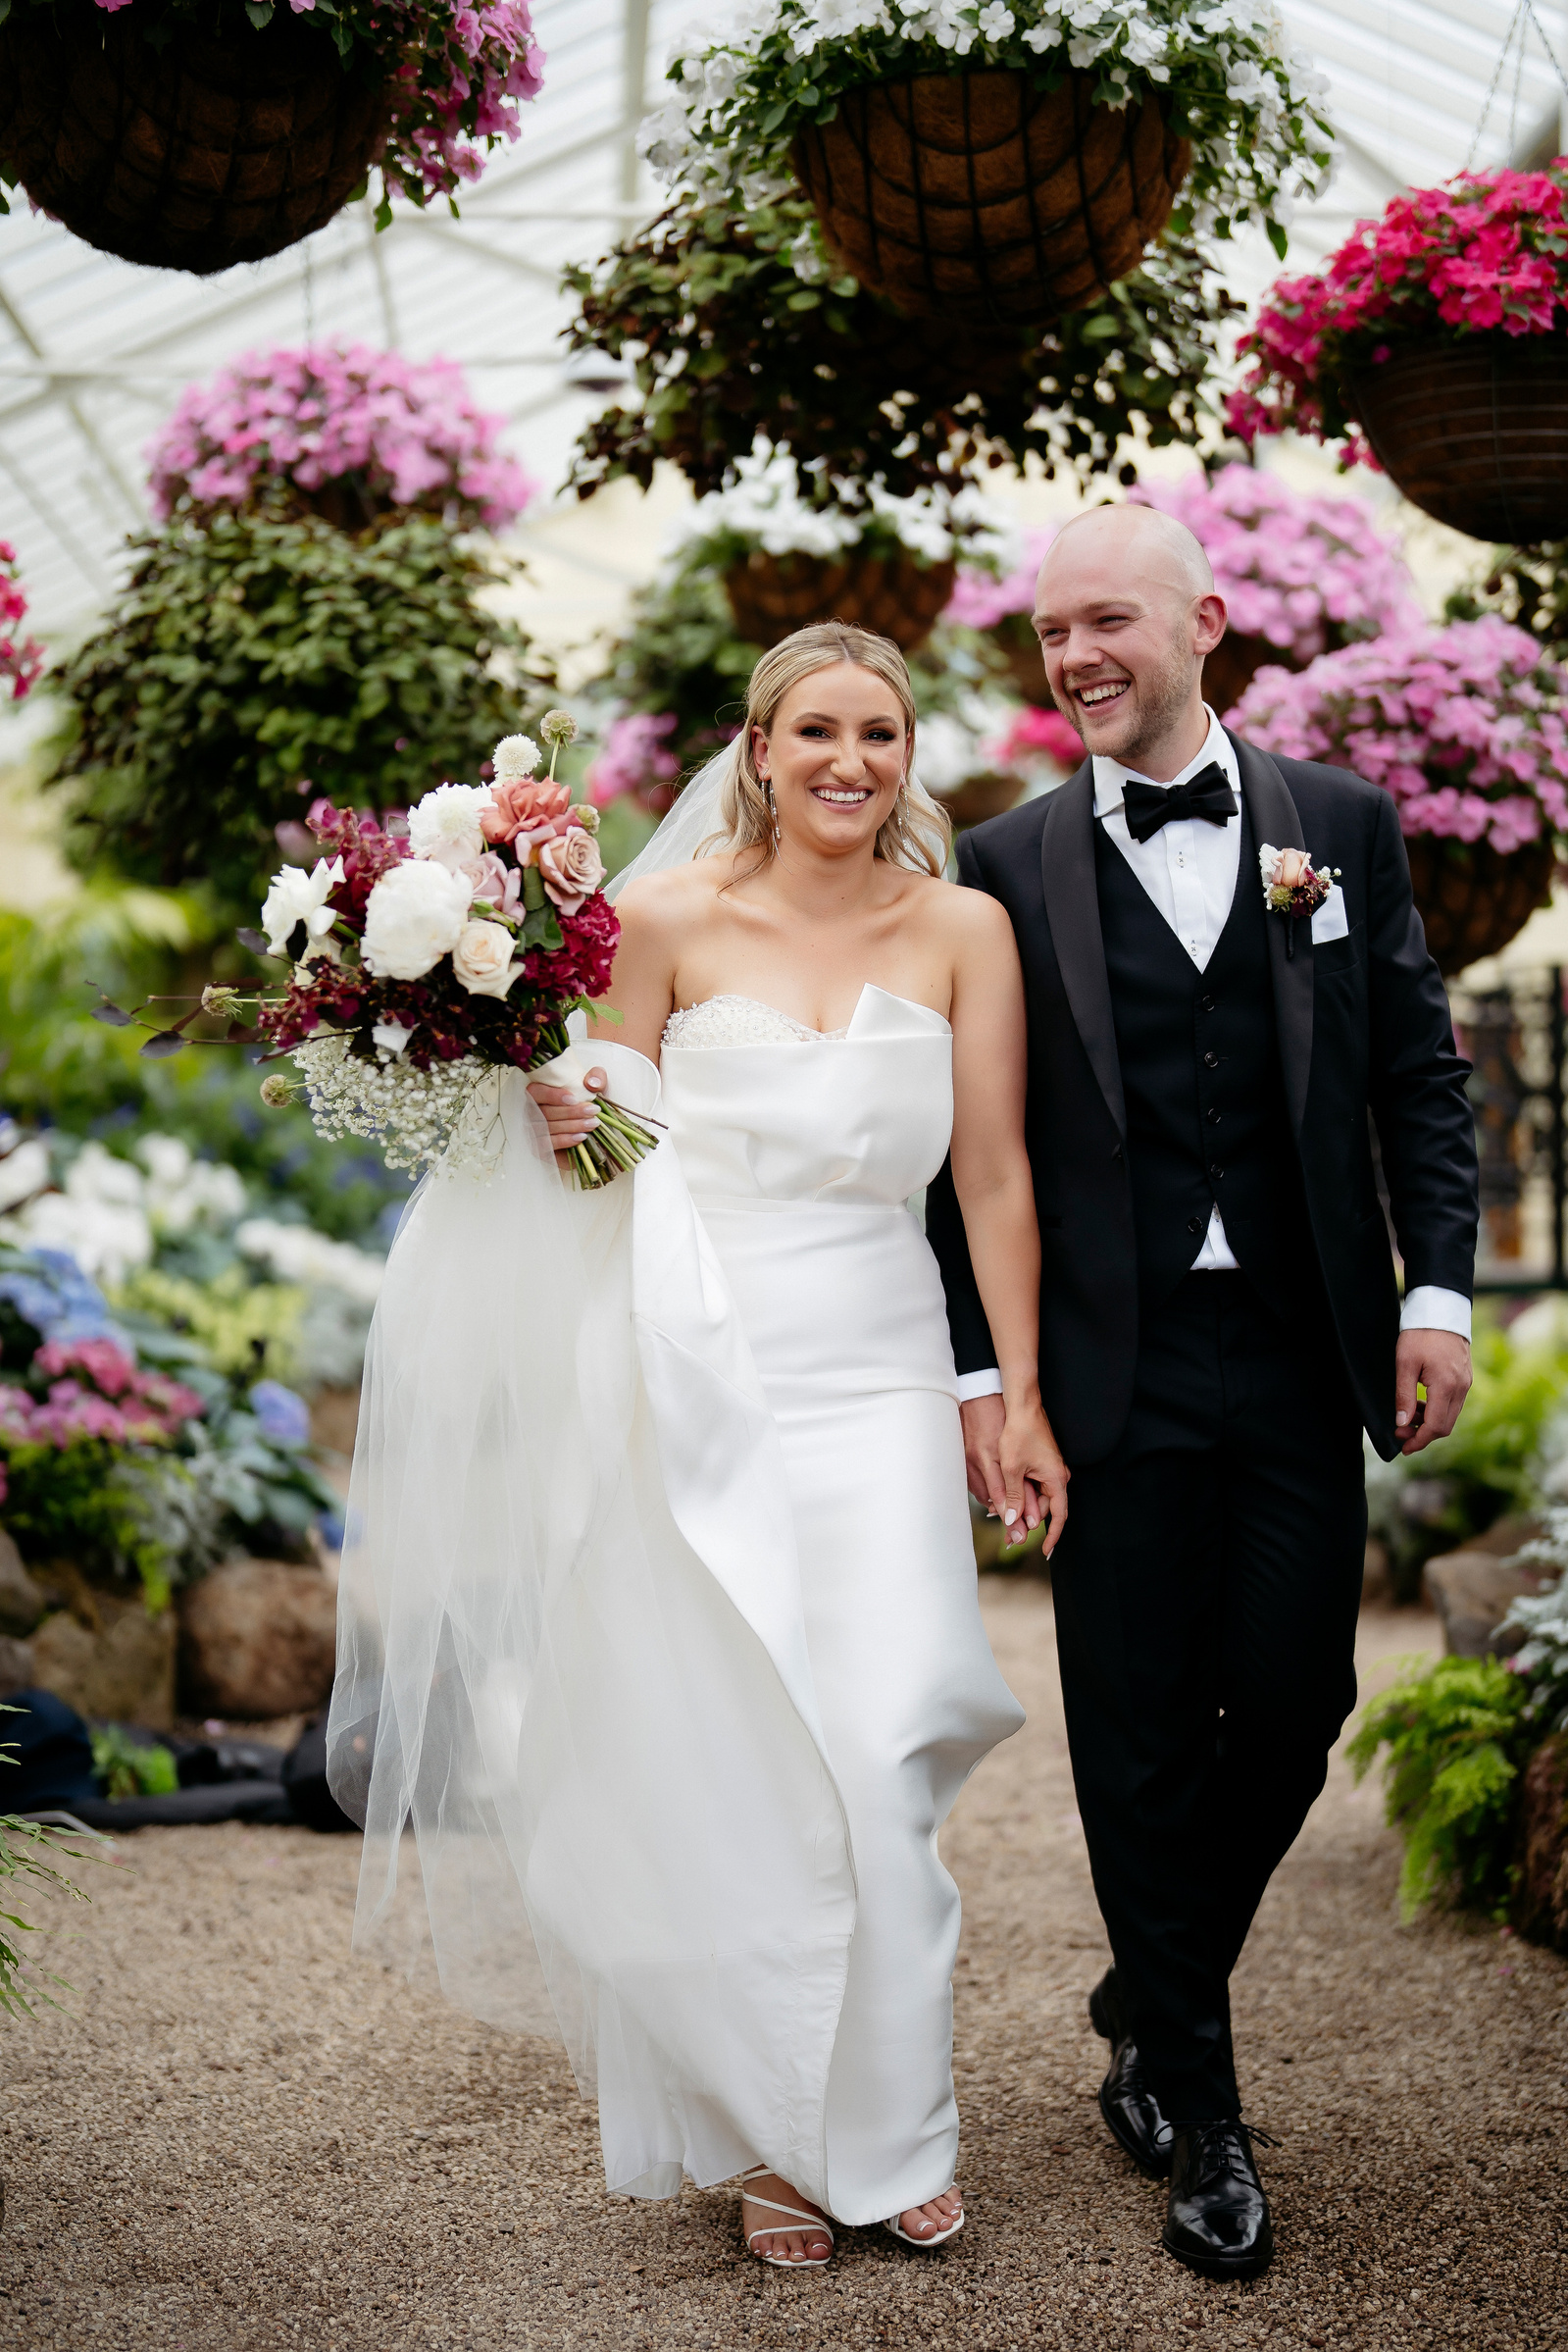 Bride and groom smiling walking through a bridge garden of flowers